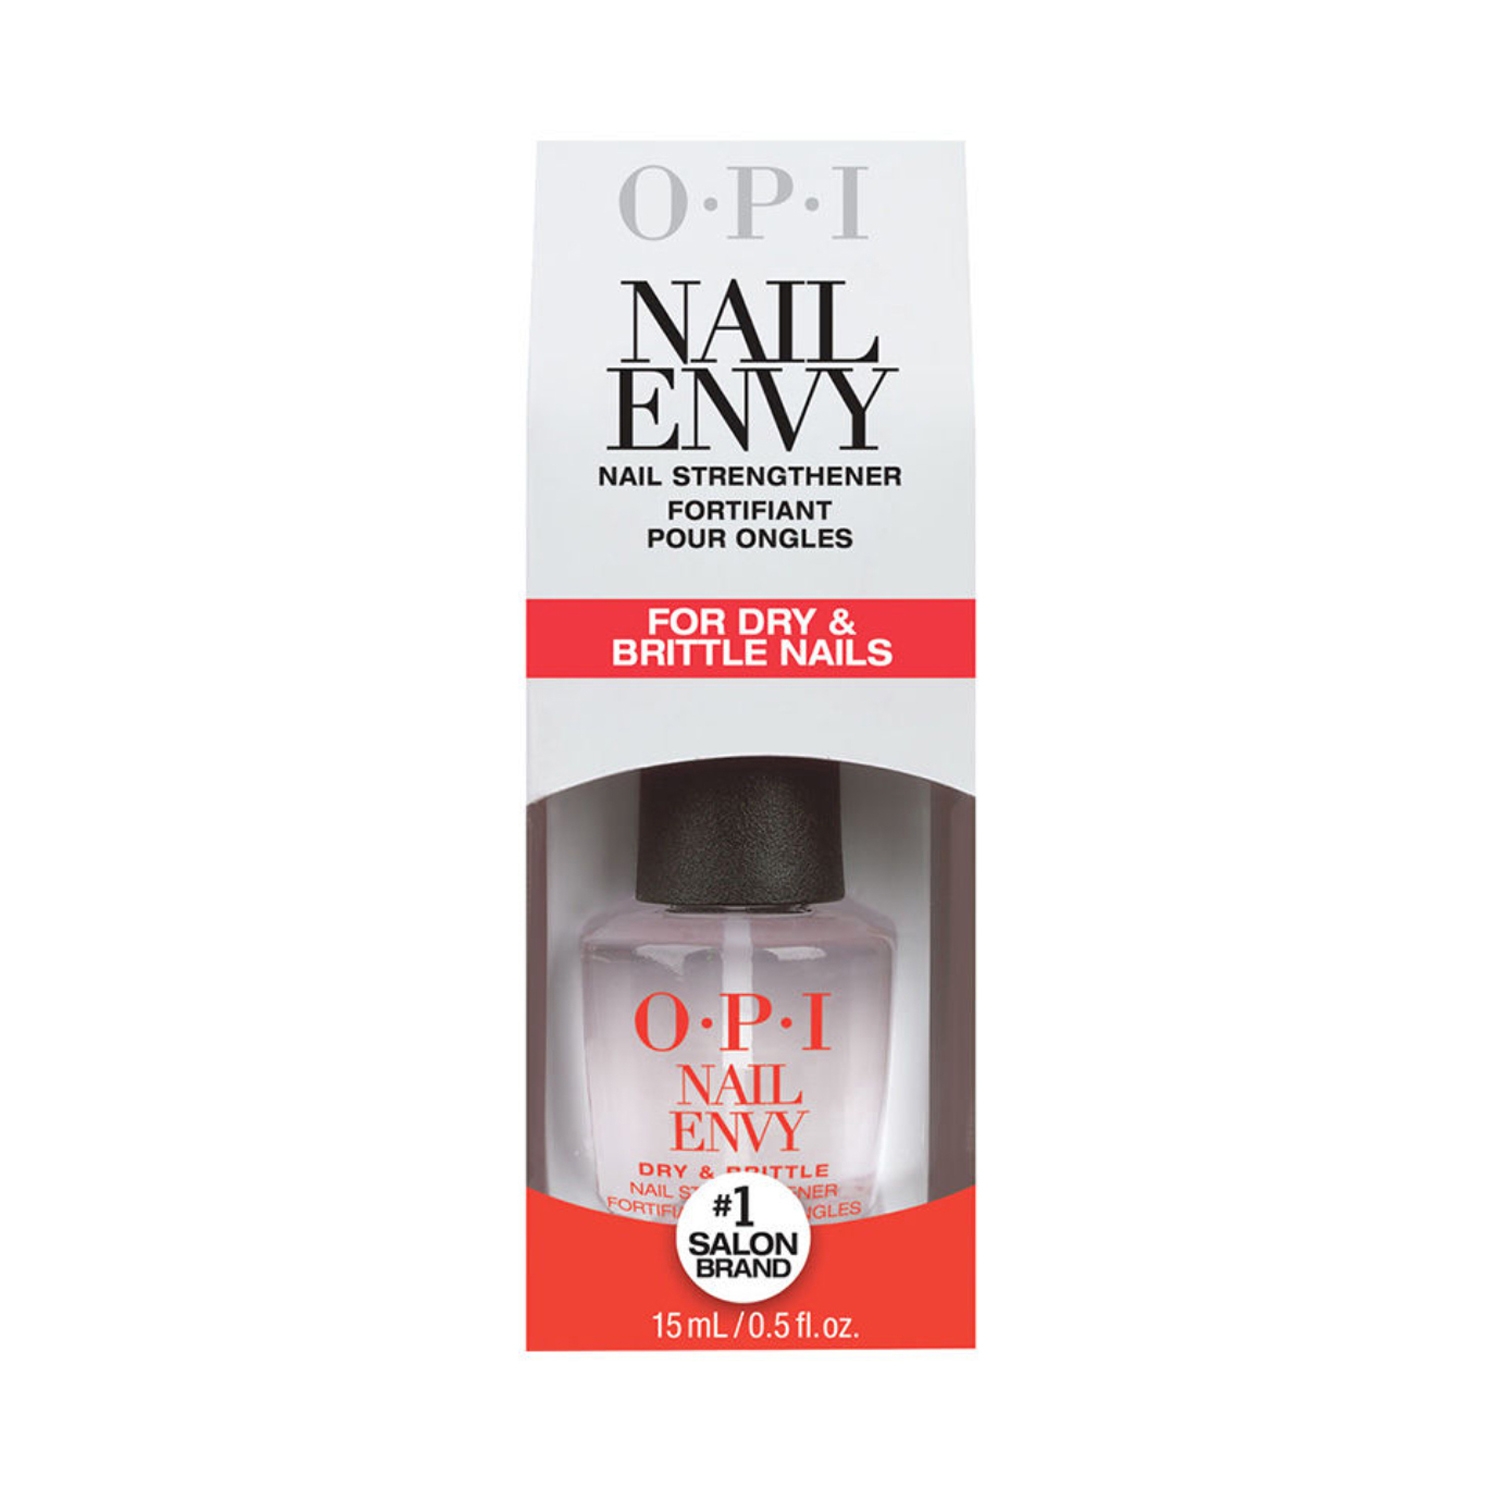 OPI Nail Envy Original Formula Nail Strengthener, .5 oz